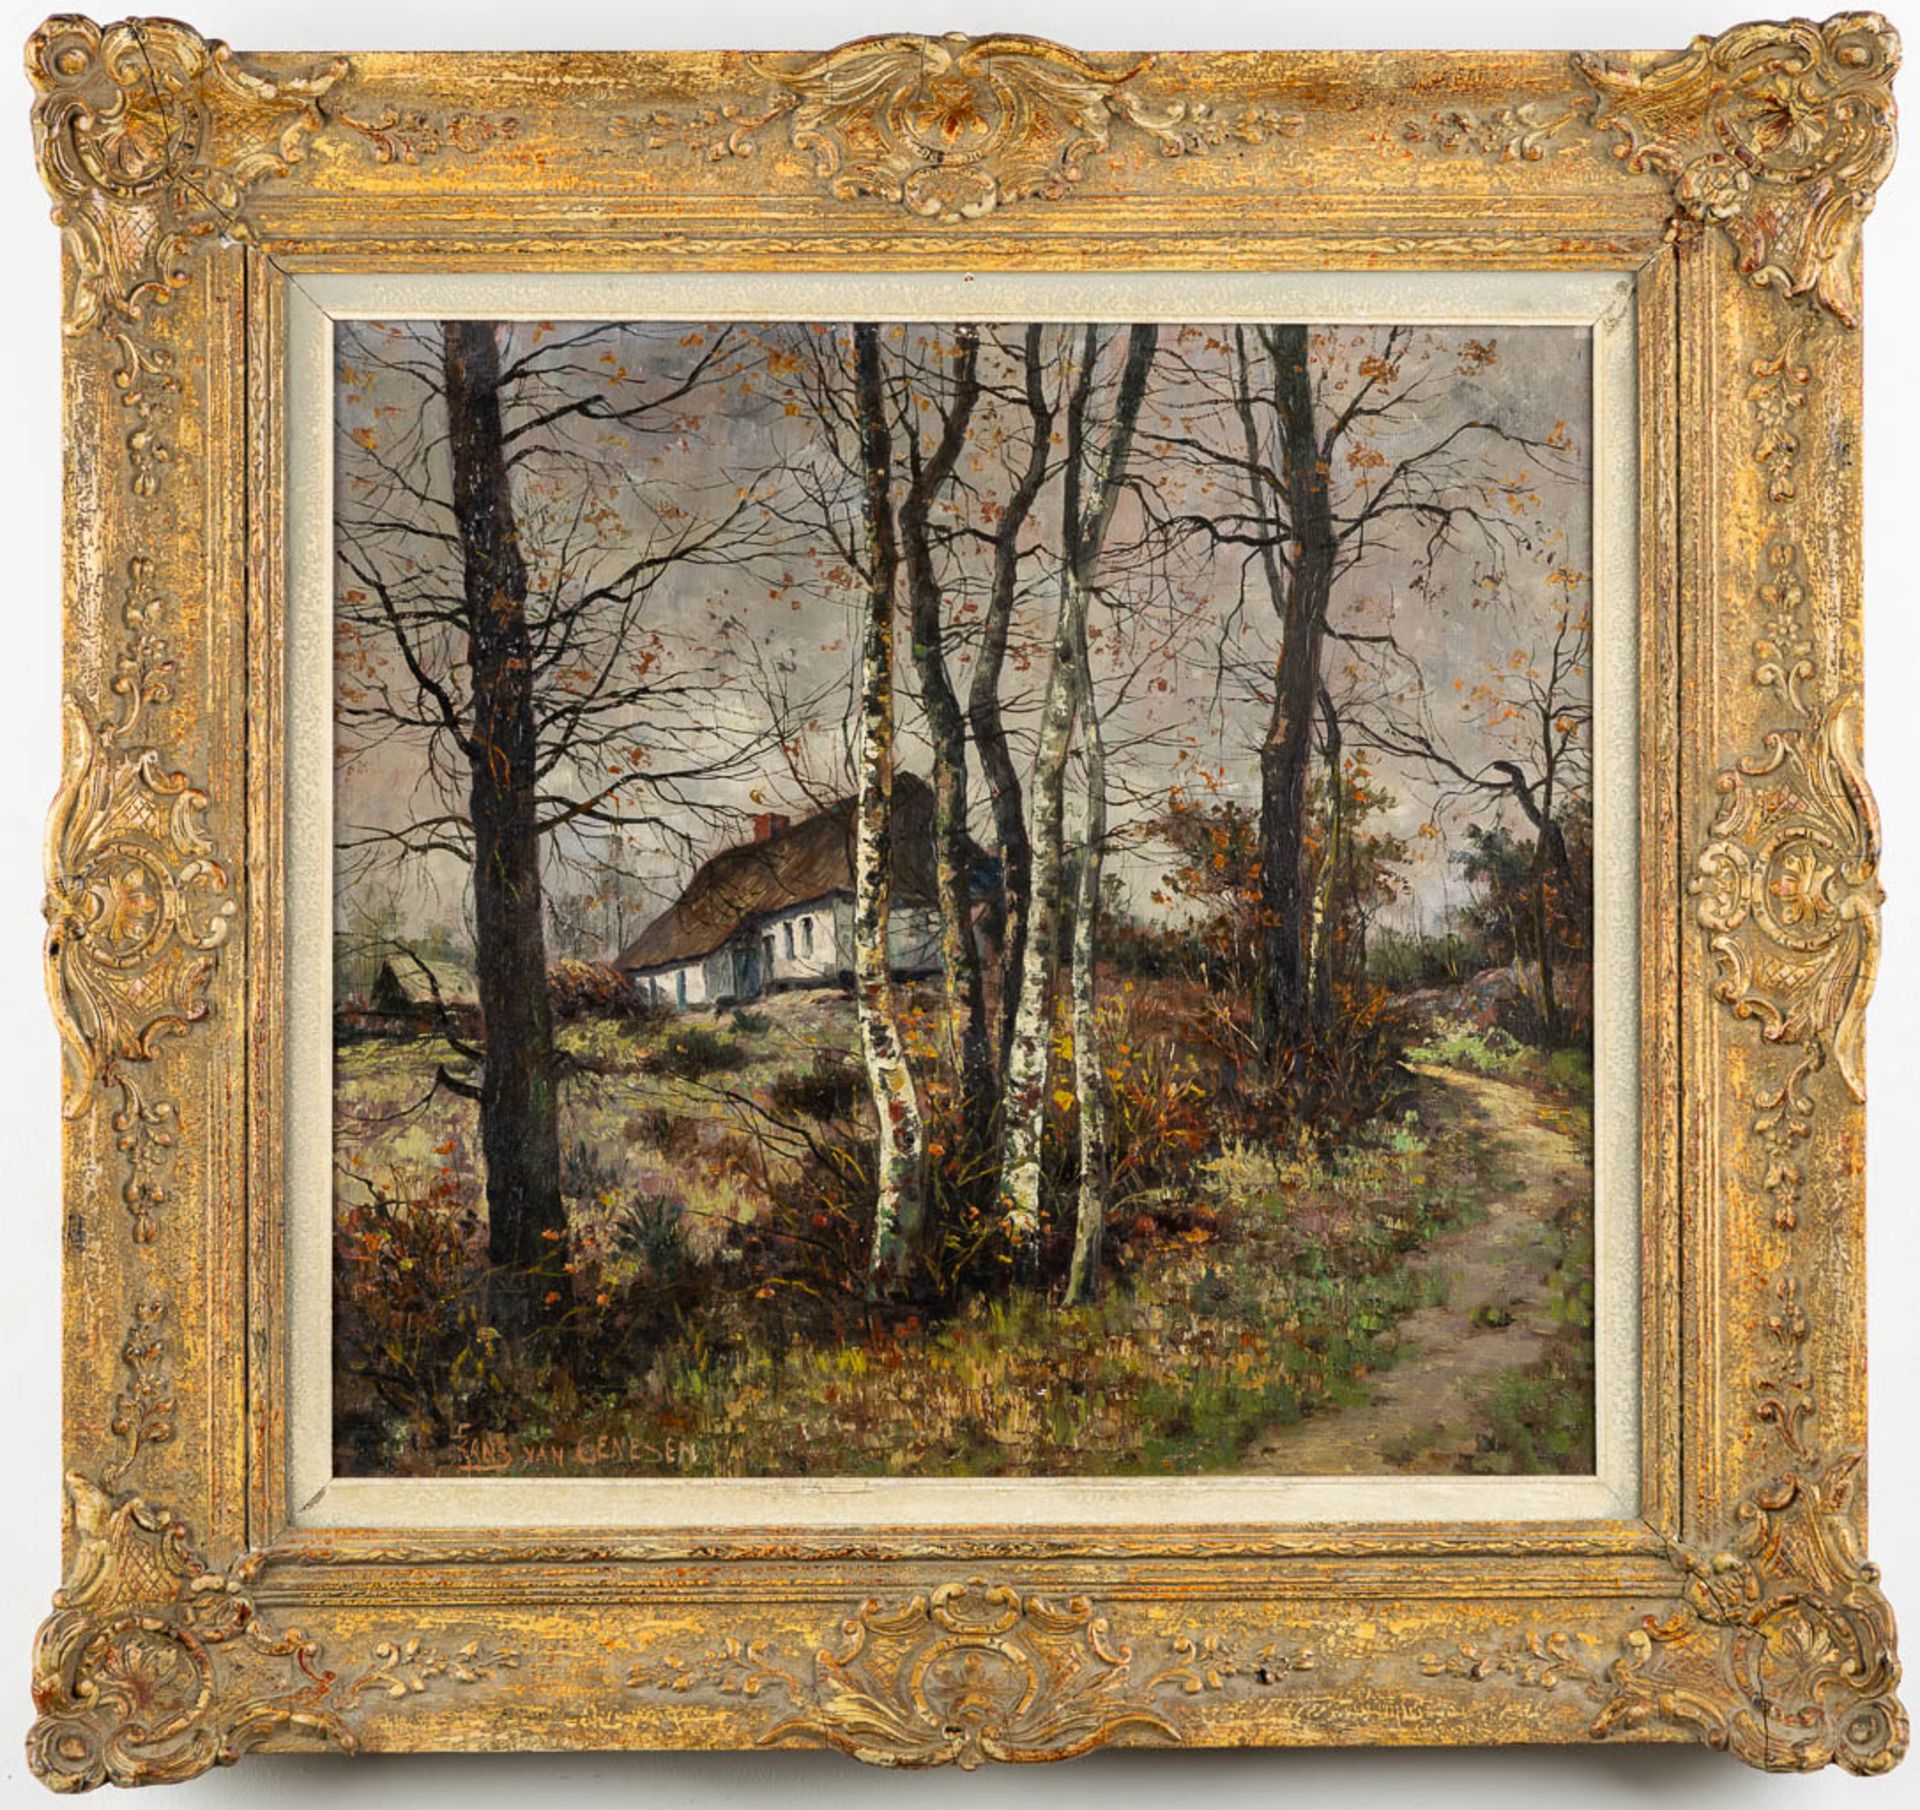 Franz VAN GENESEN (1887-1945) 'View on a farmhouse' oil on canvas. (W:60 x H:55 cm) - Image 3 of 8